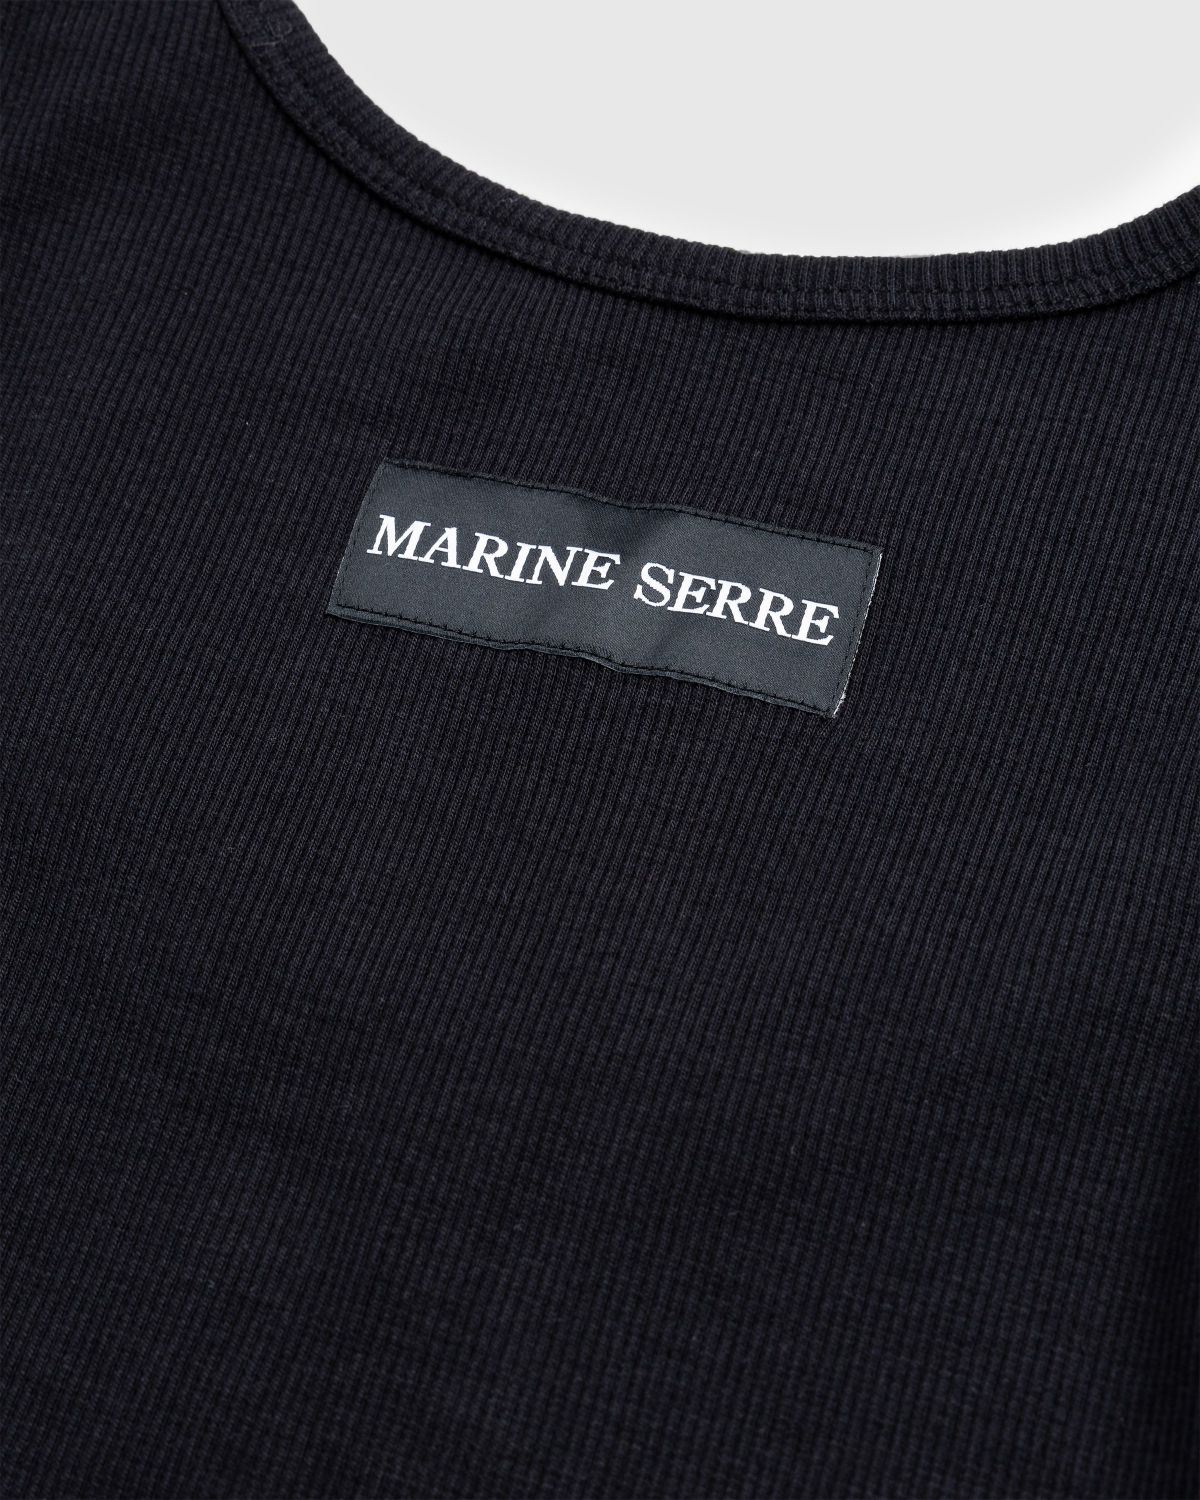 Marine Serre – Organic Cotton Rib Tank Top Black - Men Tops - Black - Image 5